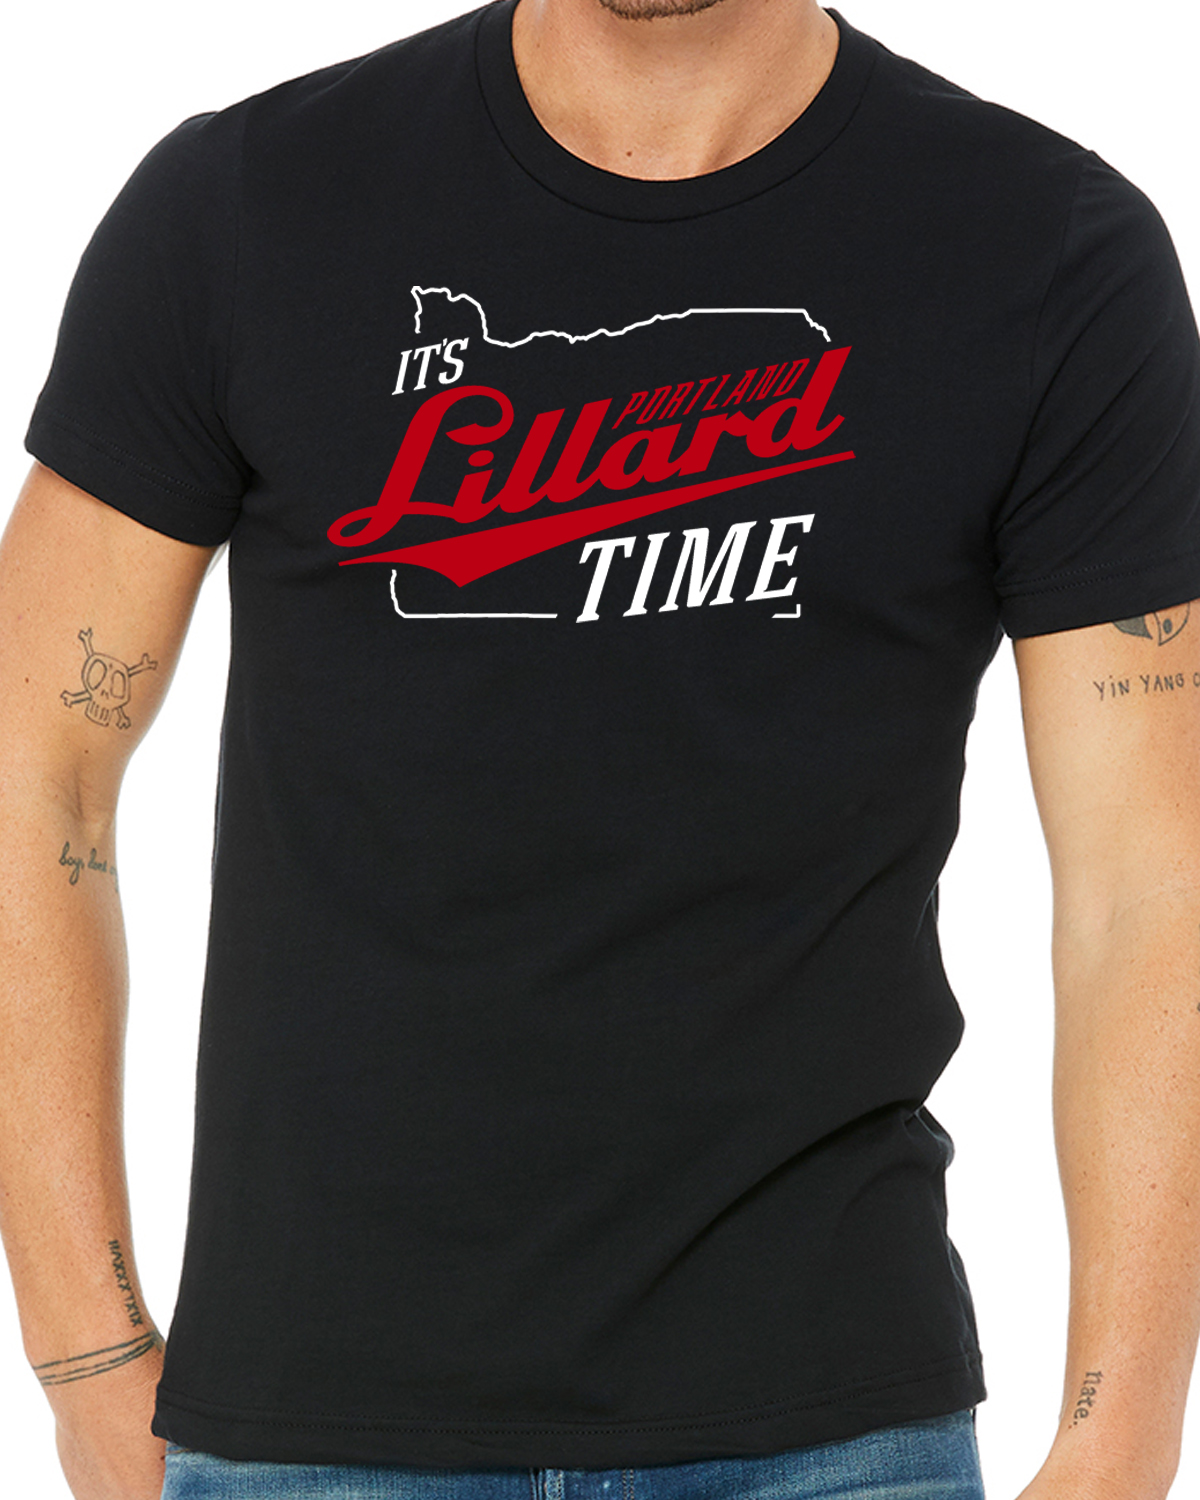 lillard time shirt